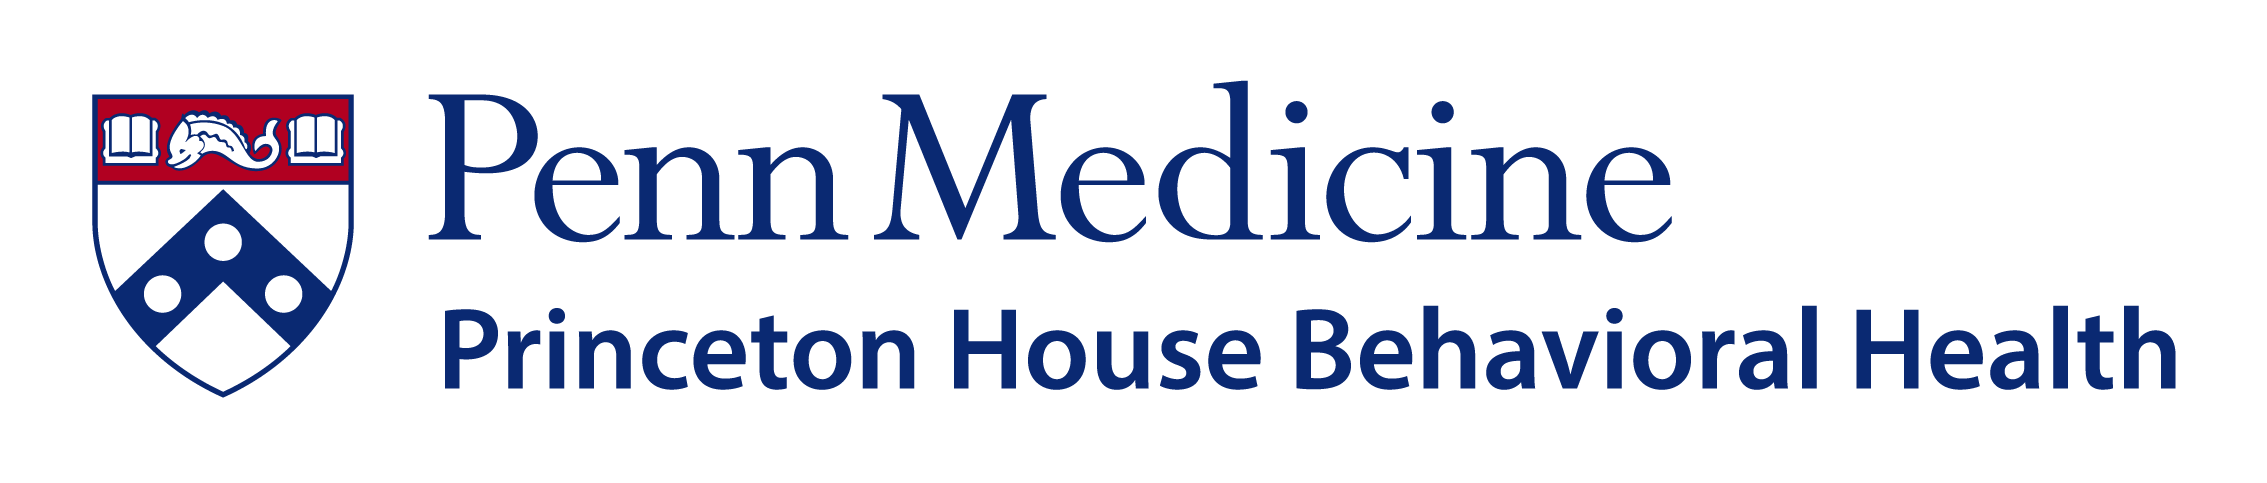 Penn Medicine Princeton House Behavioral Health - Eatontown